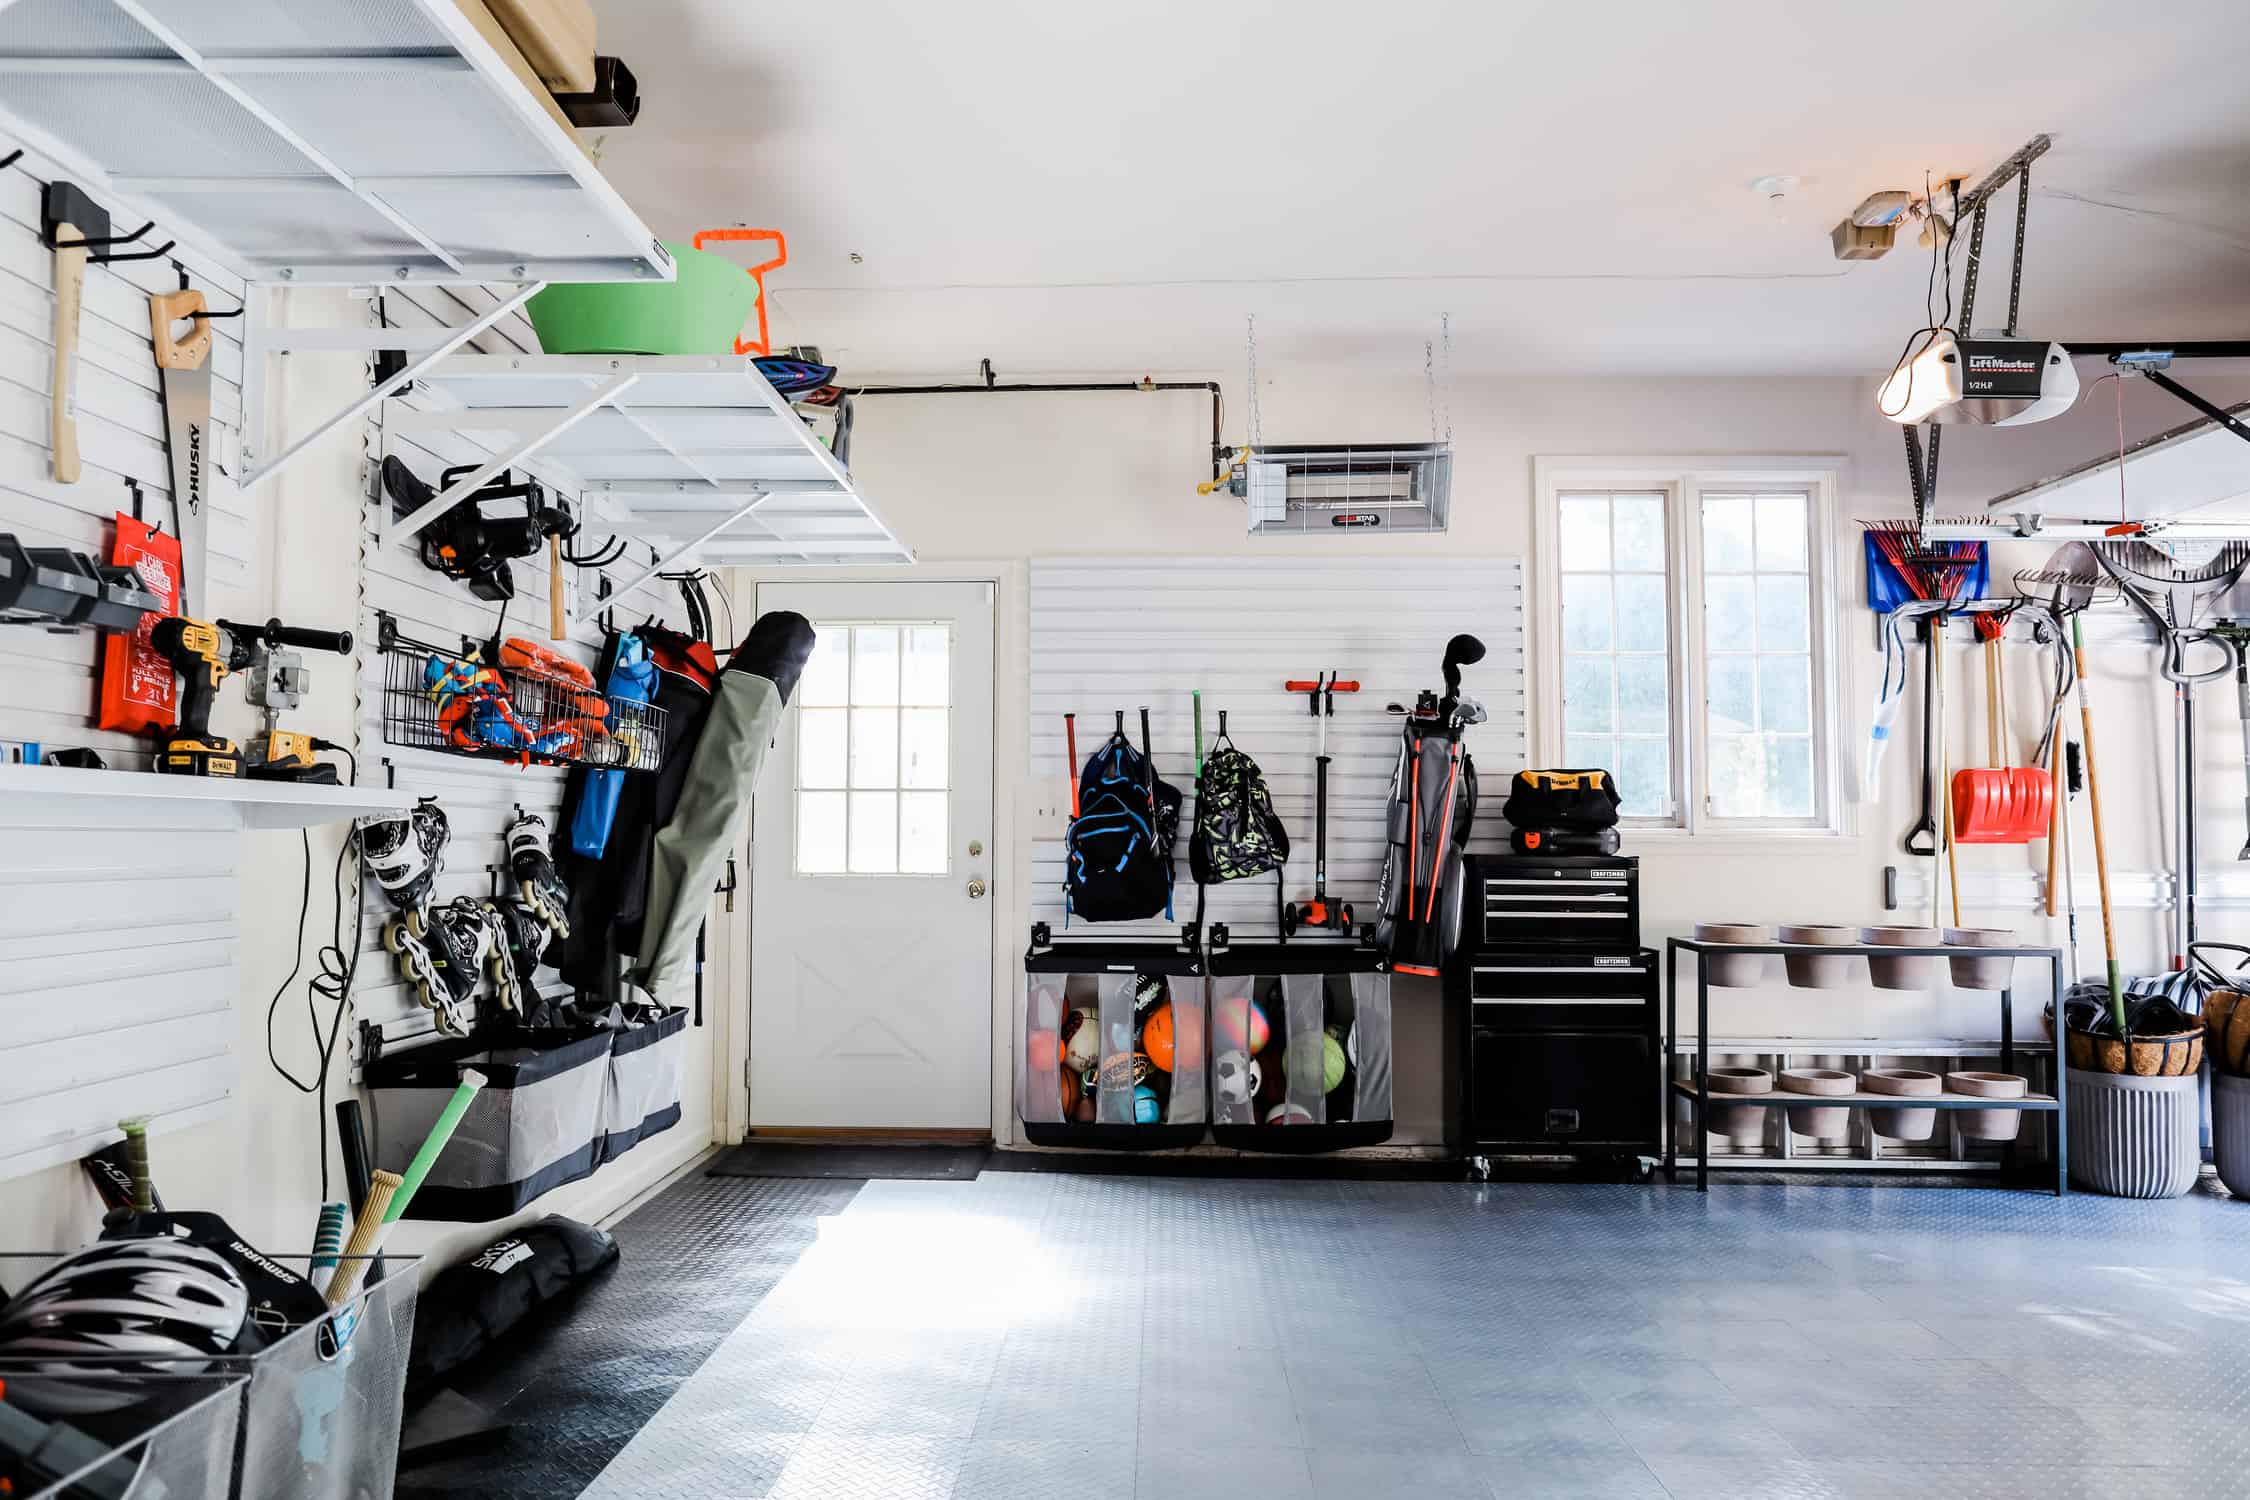 storage bins, a shoe rack, and cabinets inside a garage